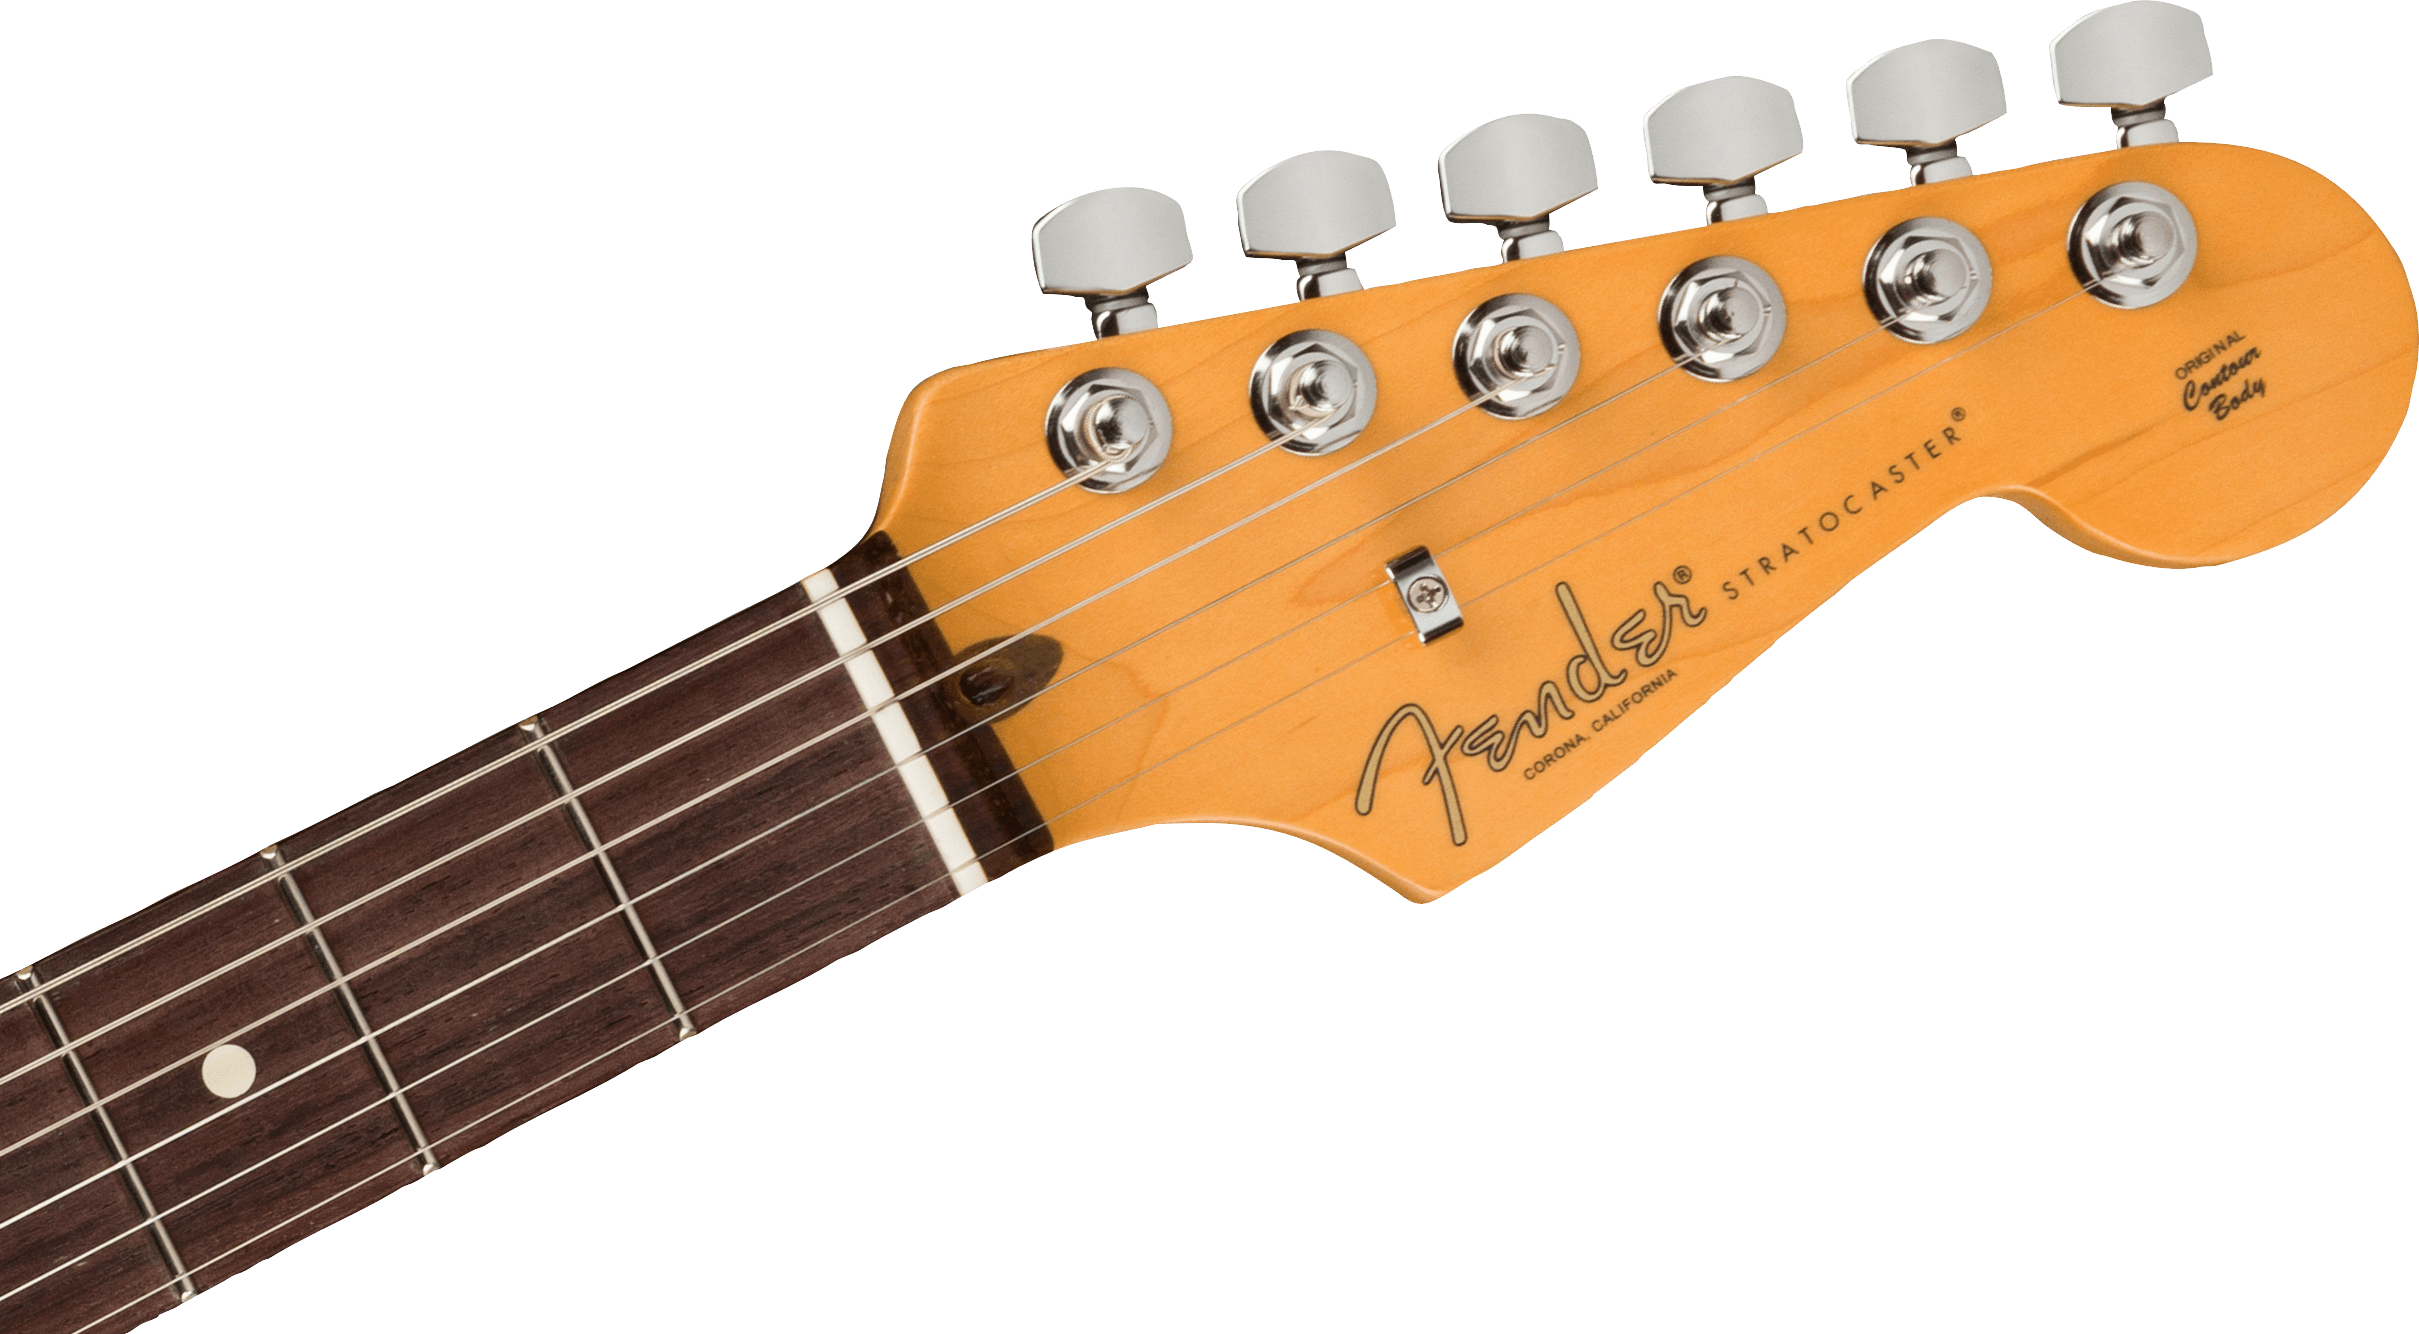 American Professional II Stratocaster Rosewood Fingerboard, Mercury